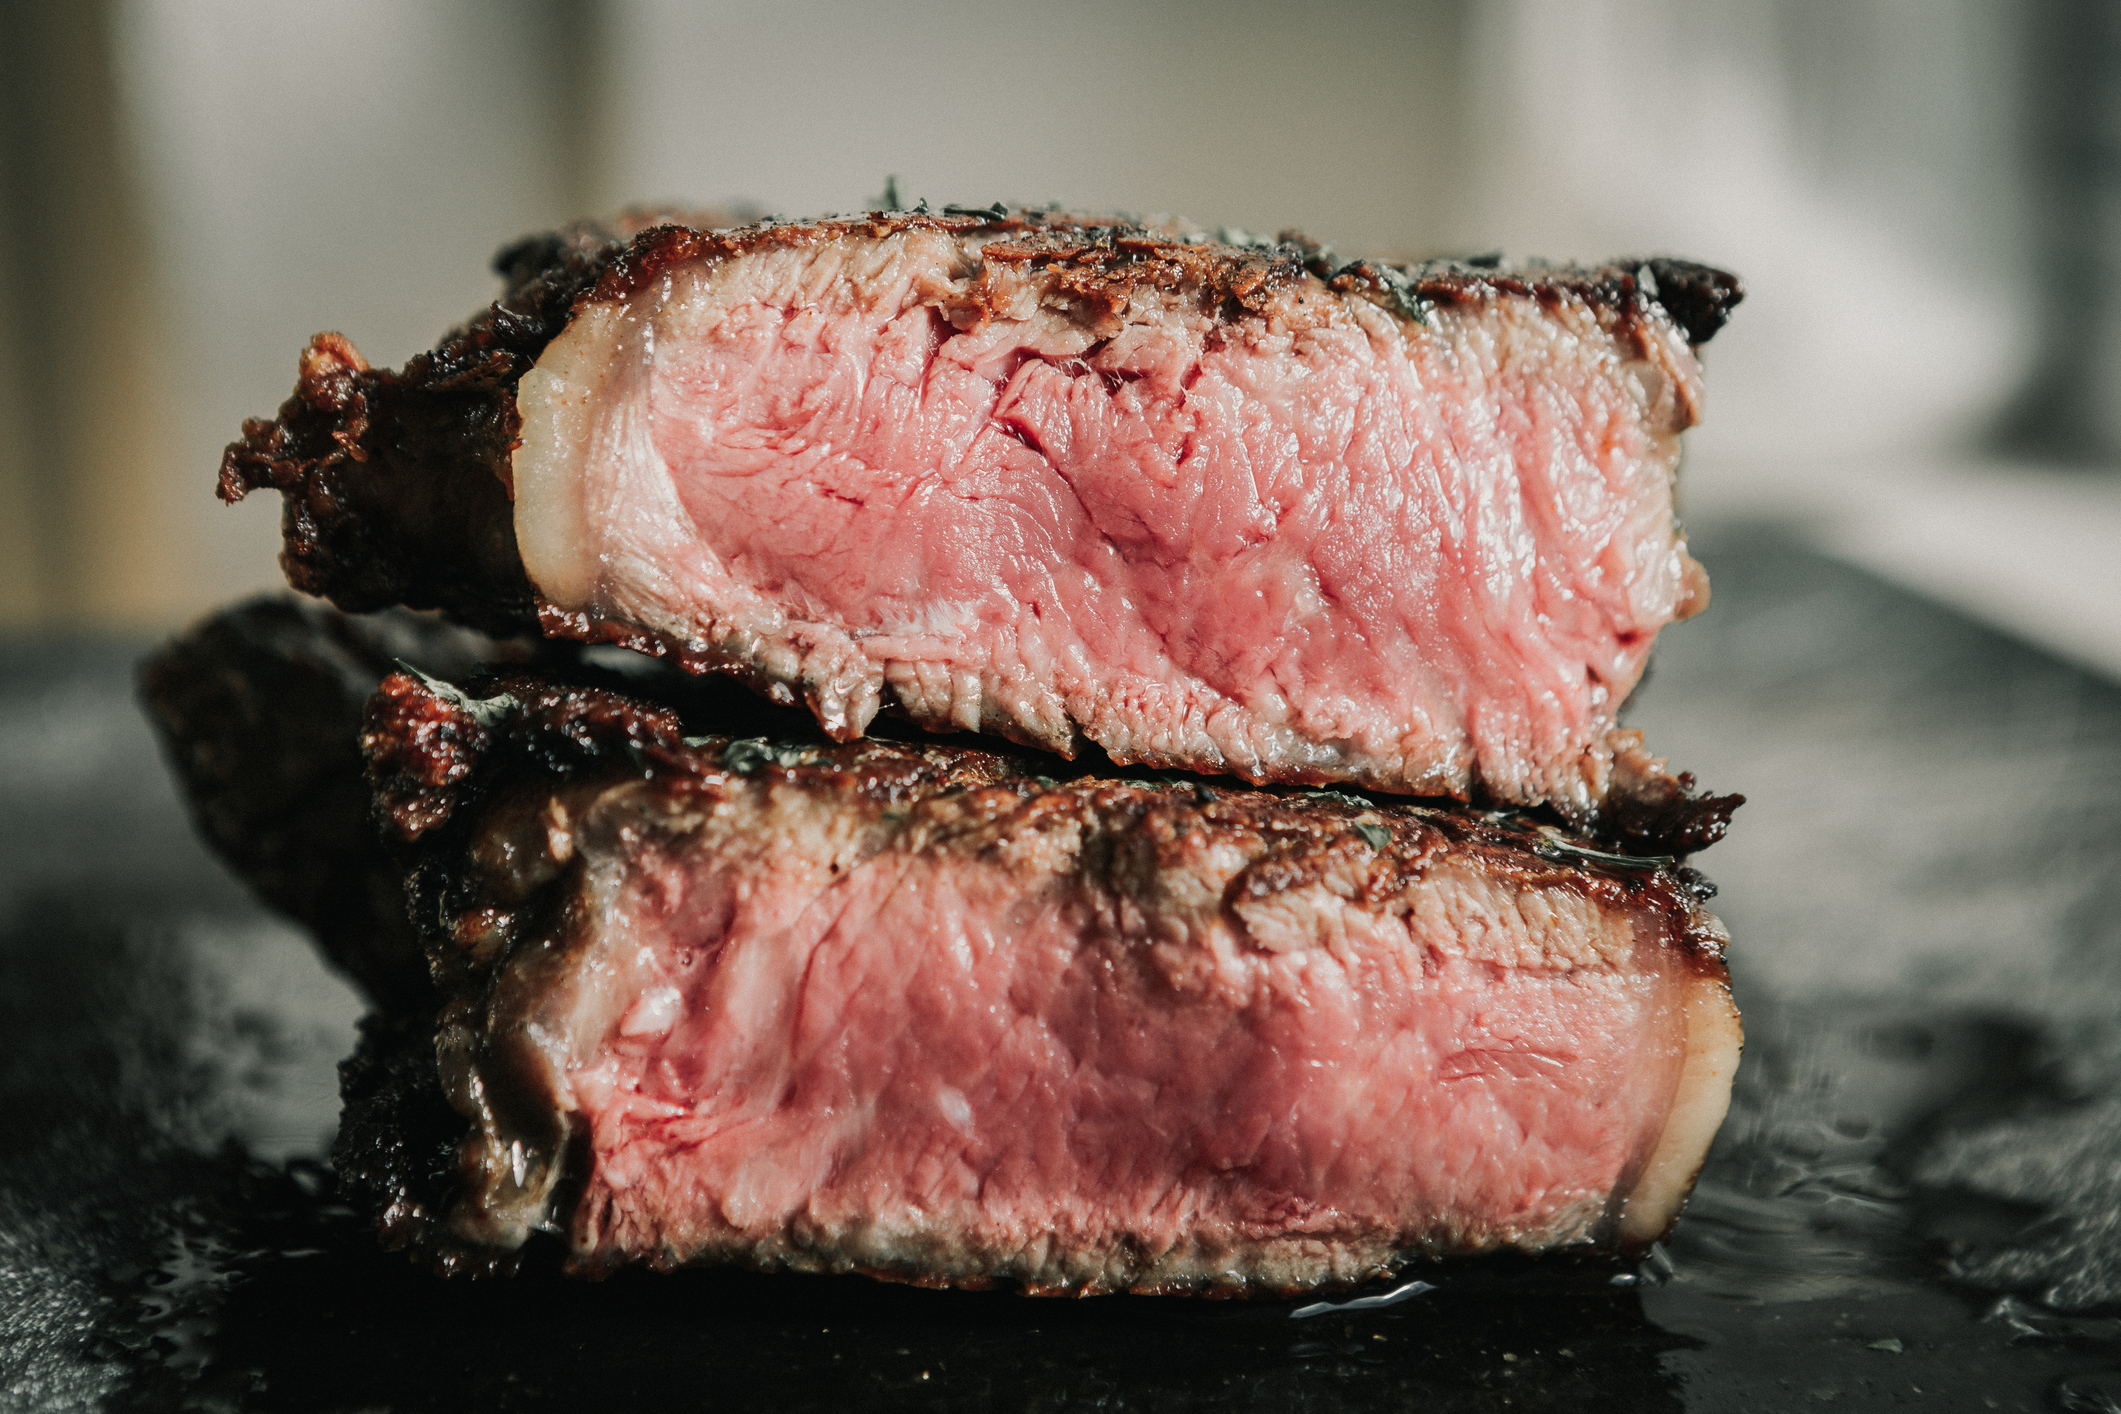 A close-up image of steak, cut open, revealing a medium rare cook